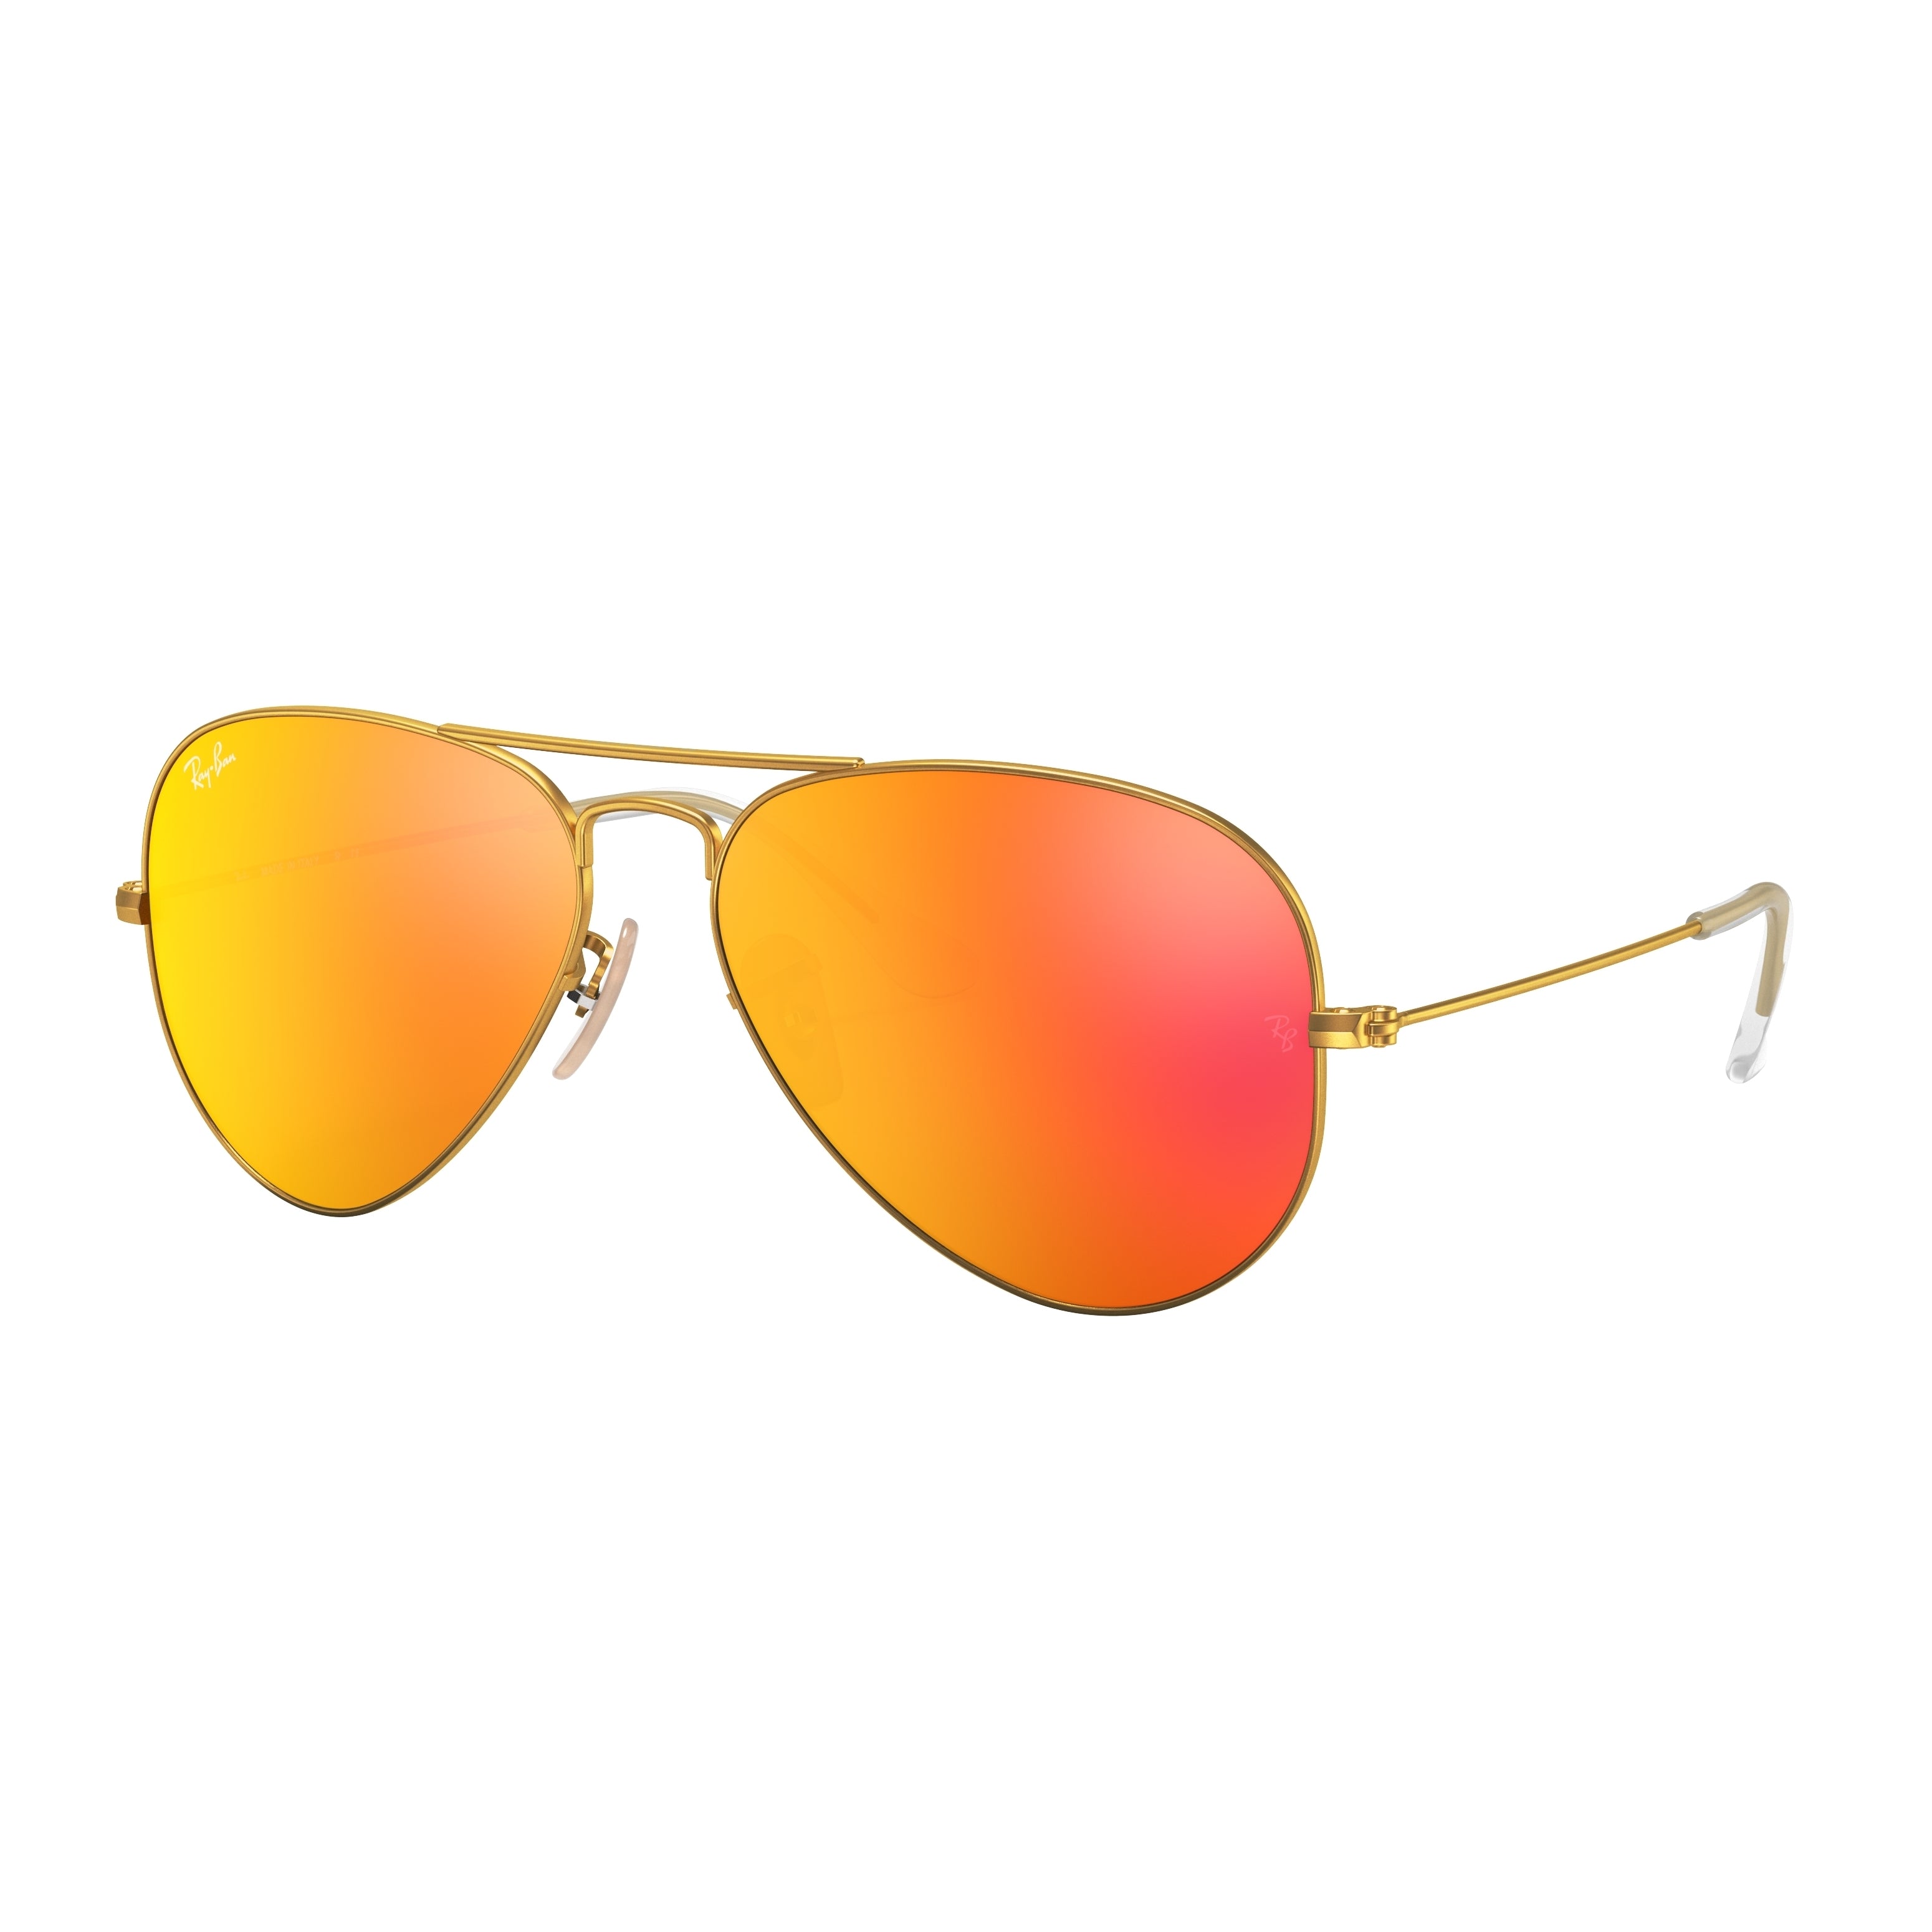 Ray-Ban Ray-Ban Aviator Flash Lenses Orange Flash Pilot Unisex Sunglasses RB3025 112/69 58